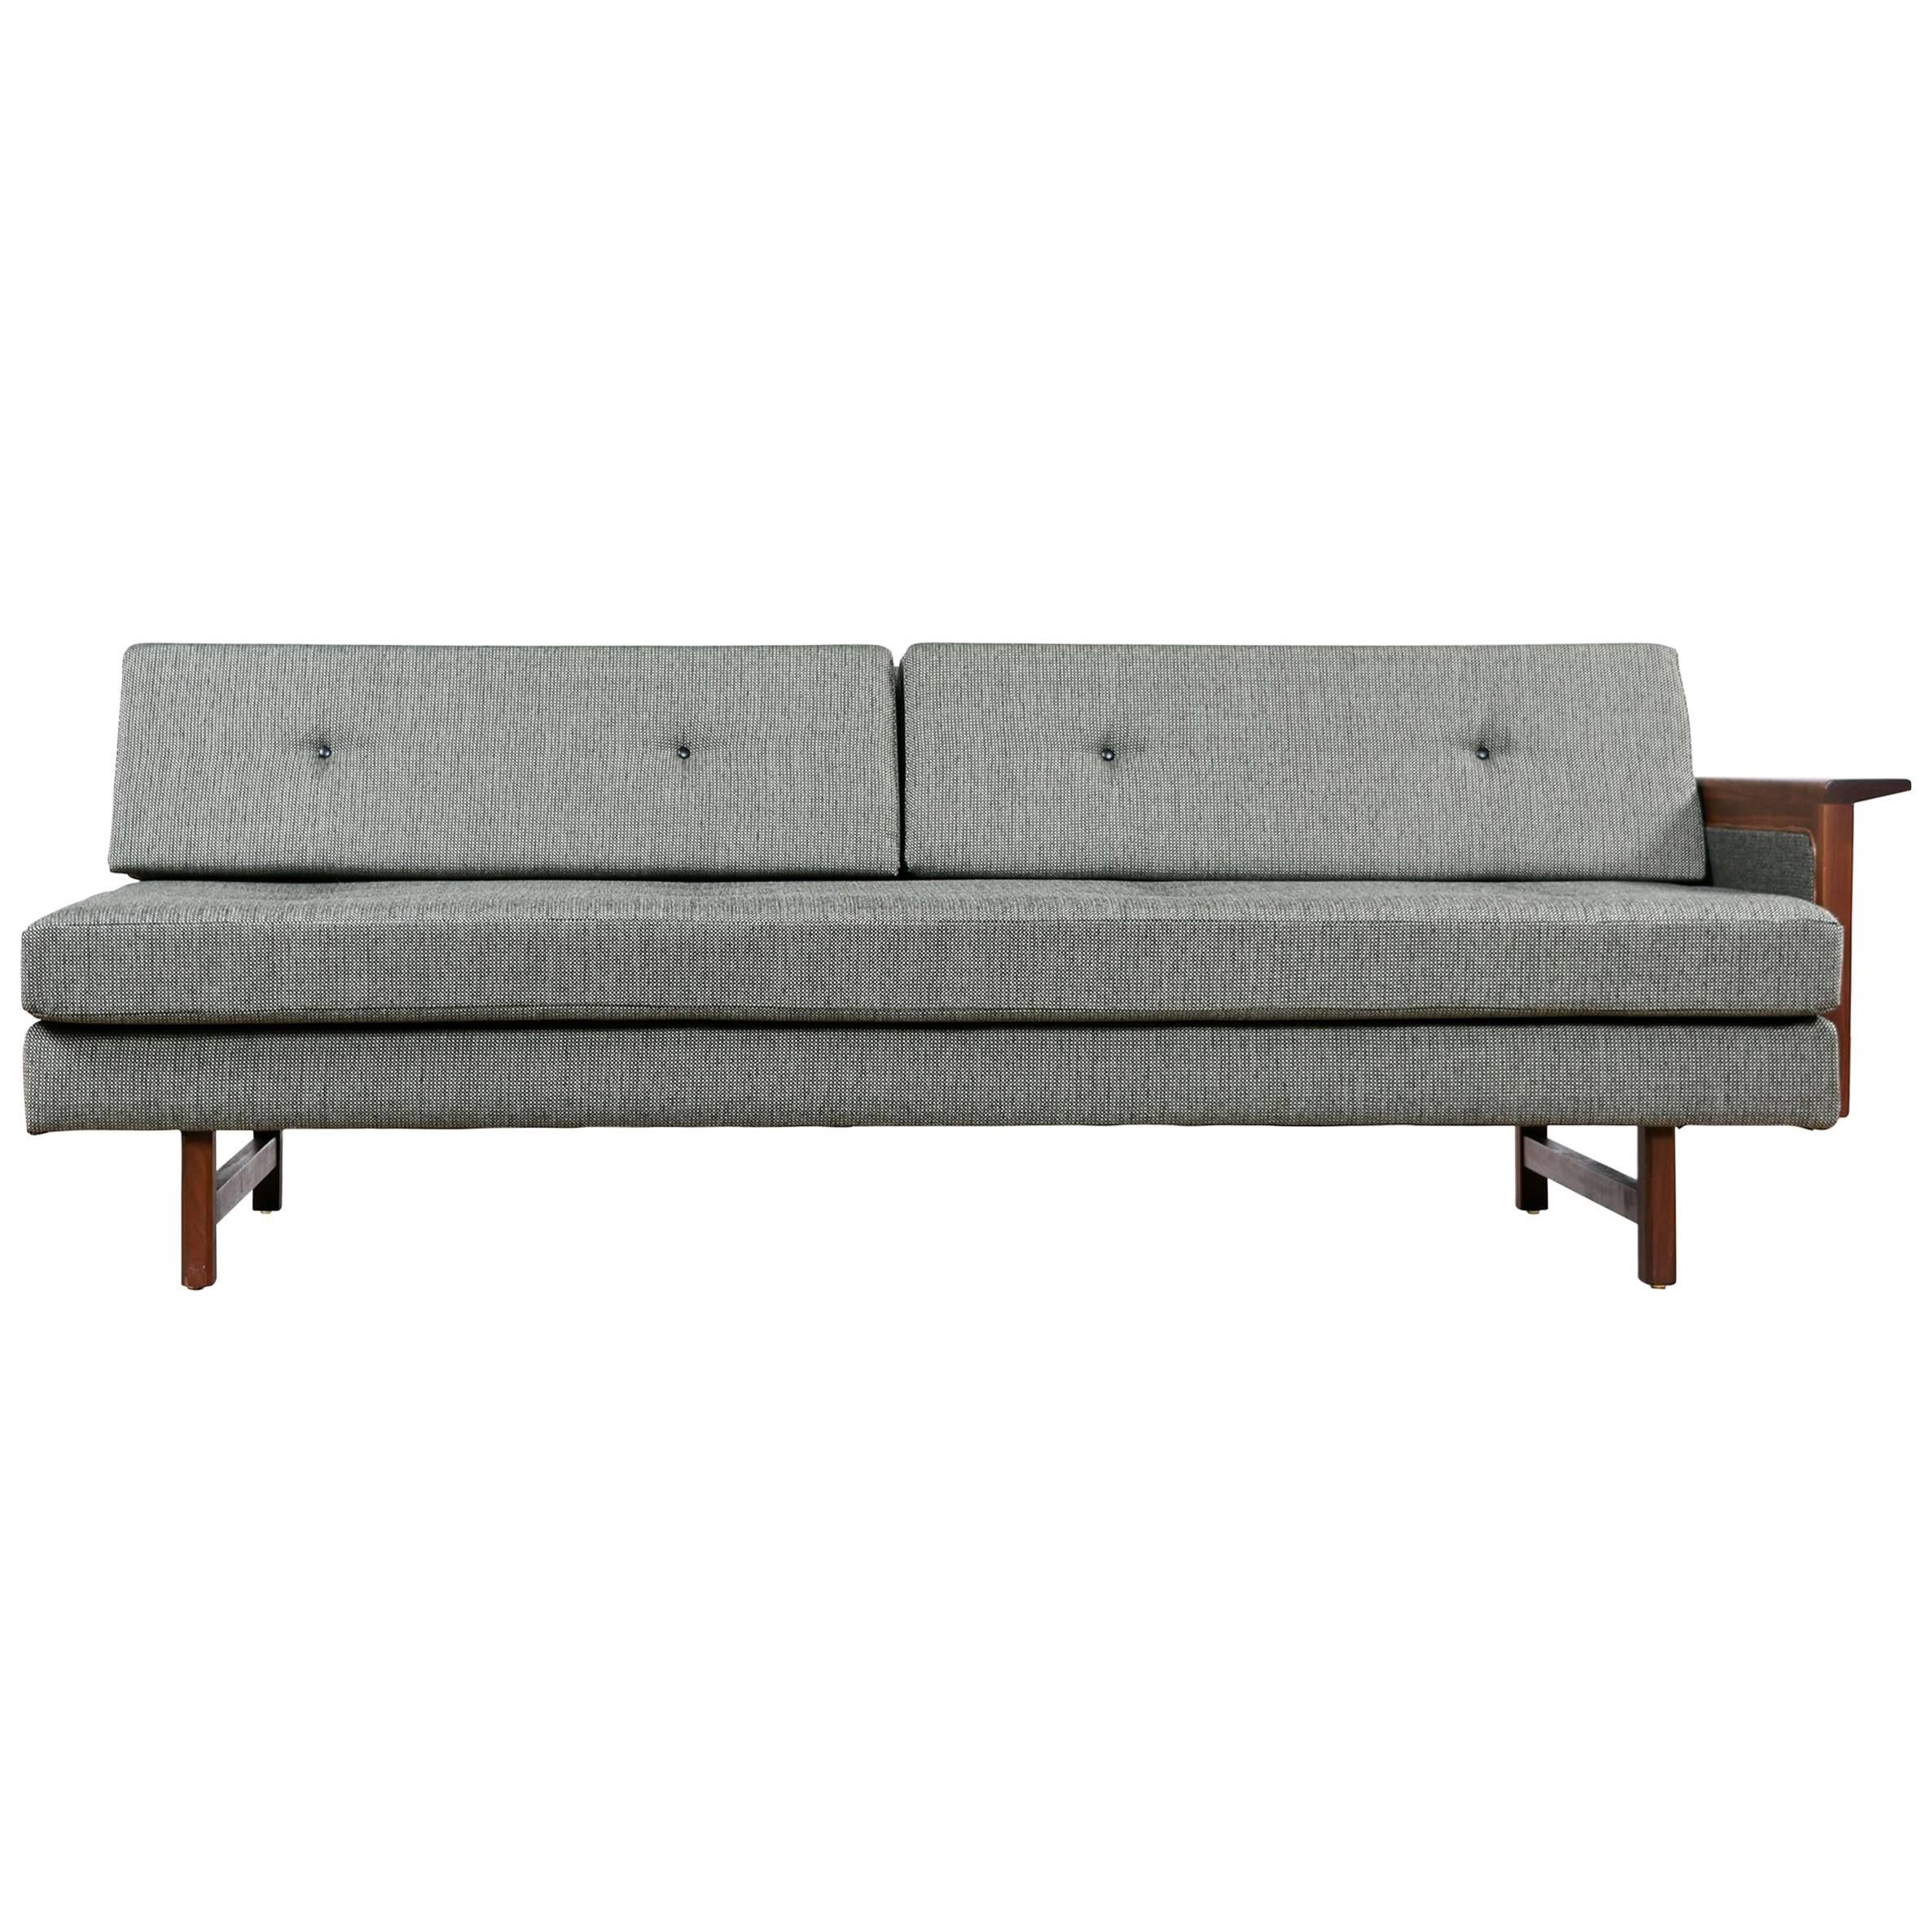 Restored One Arm Mid-Century Modern Sofa